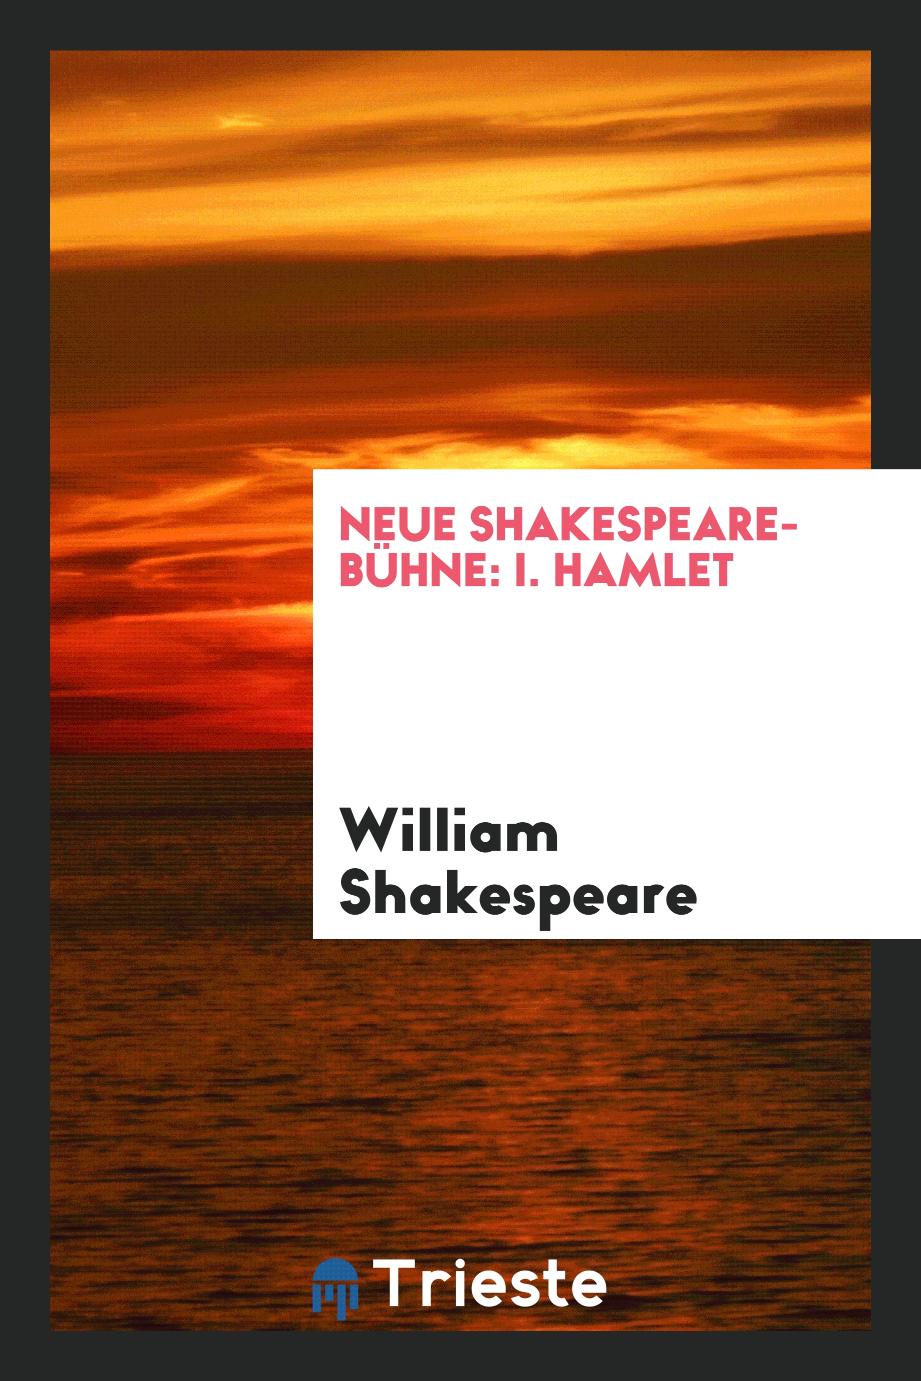 Neue Shakespeare-Bühne: I. Hamlet